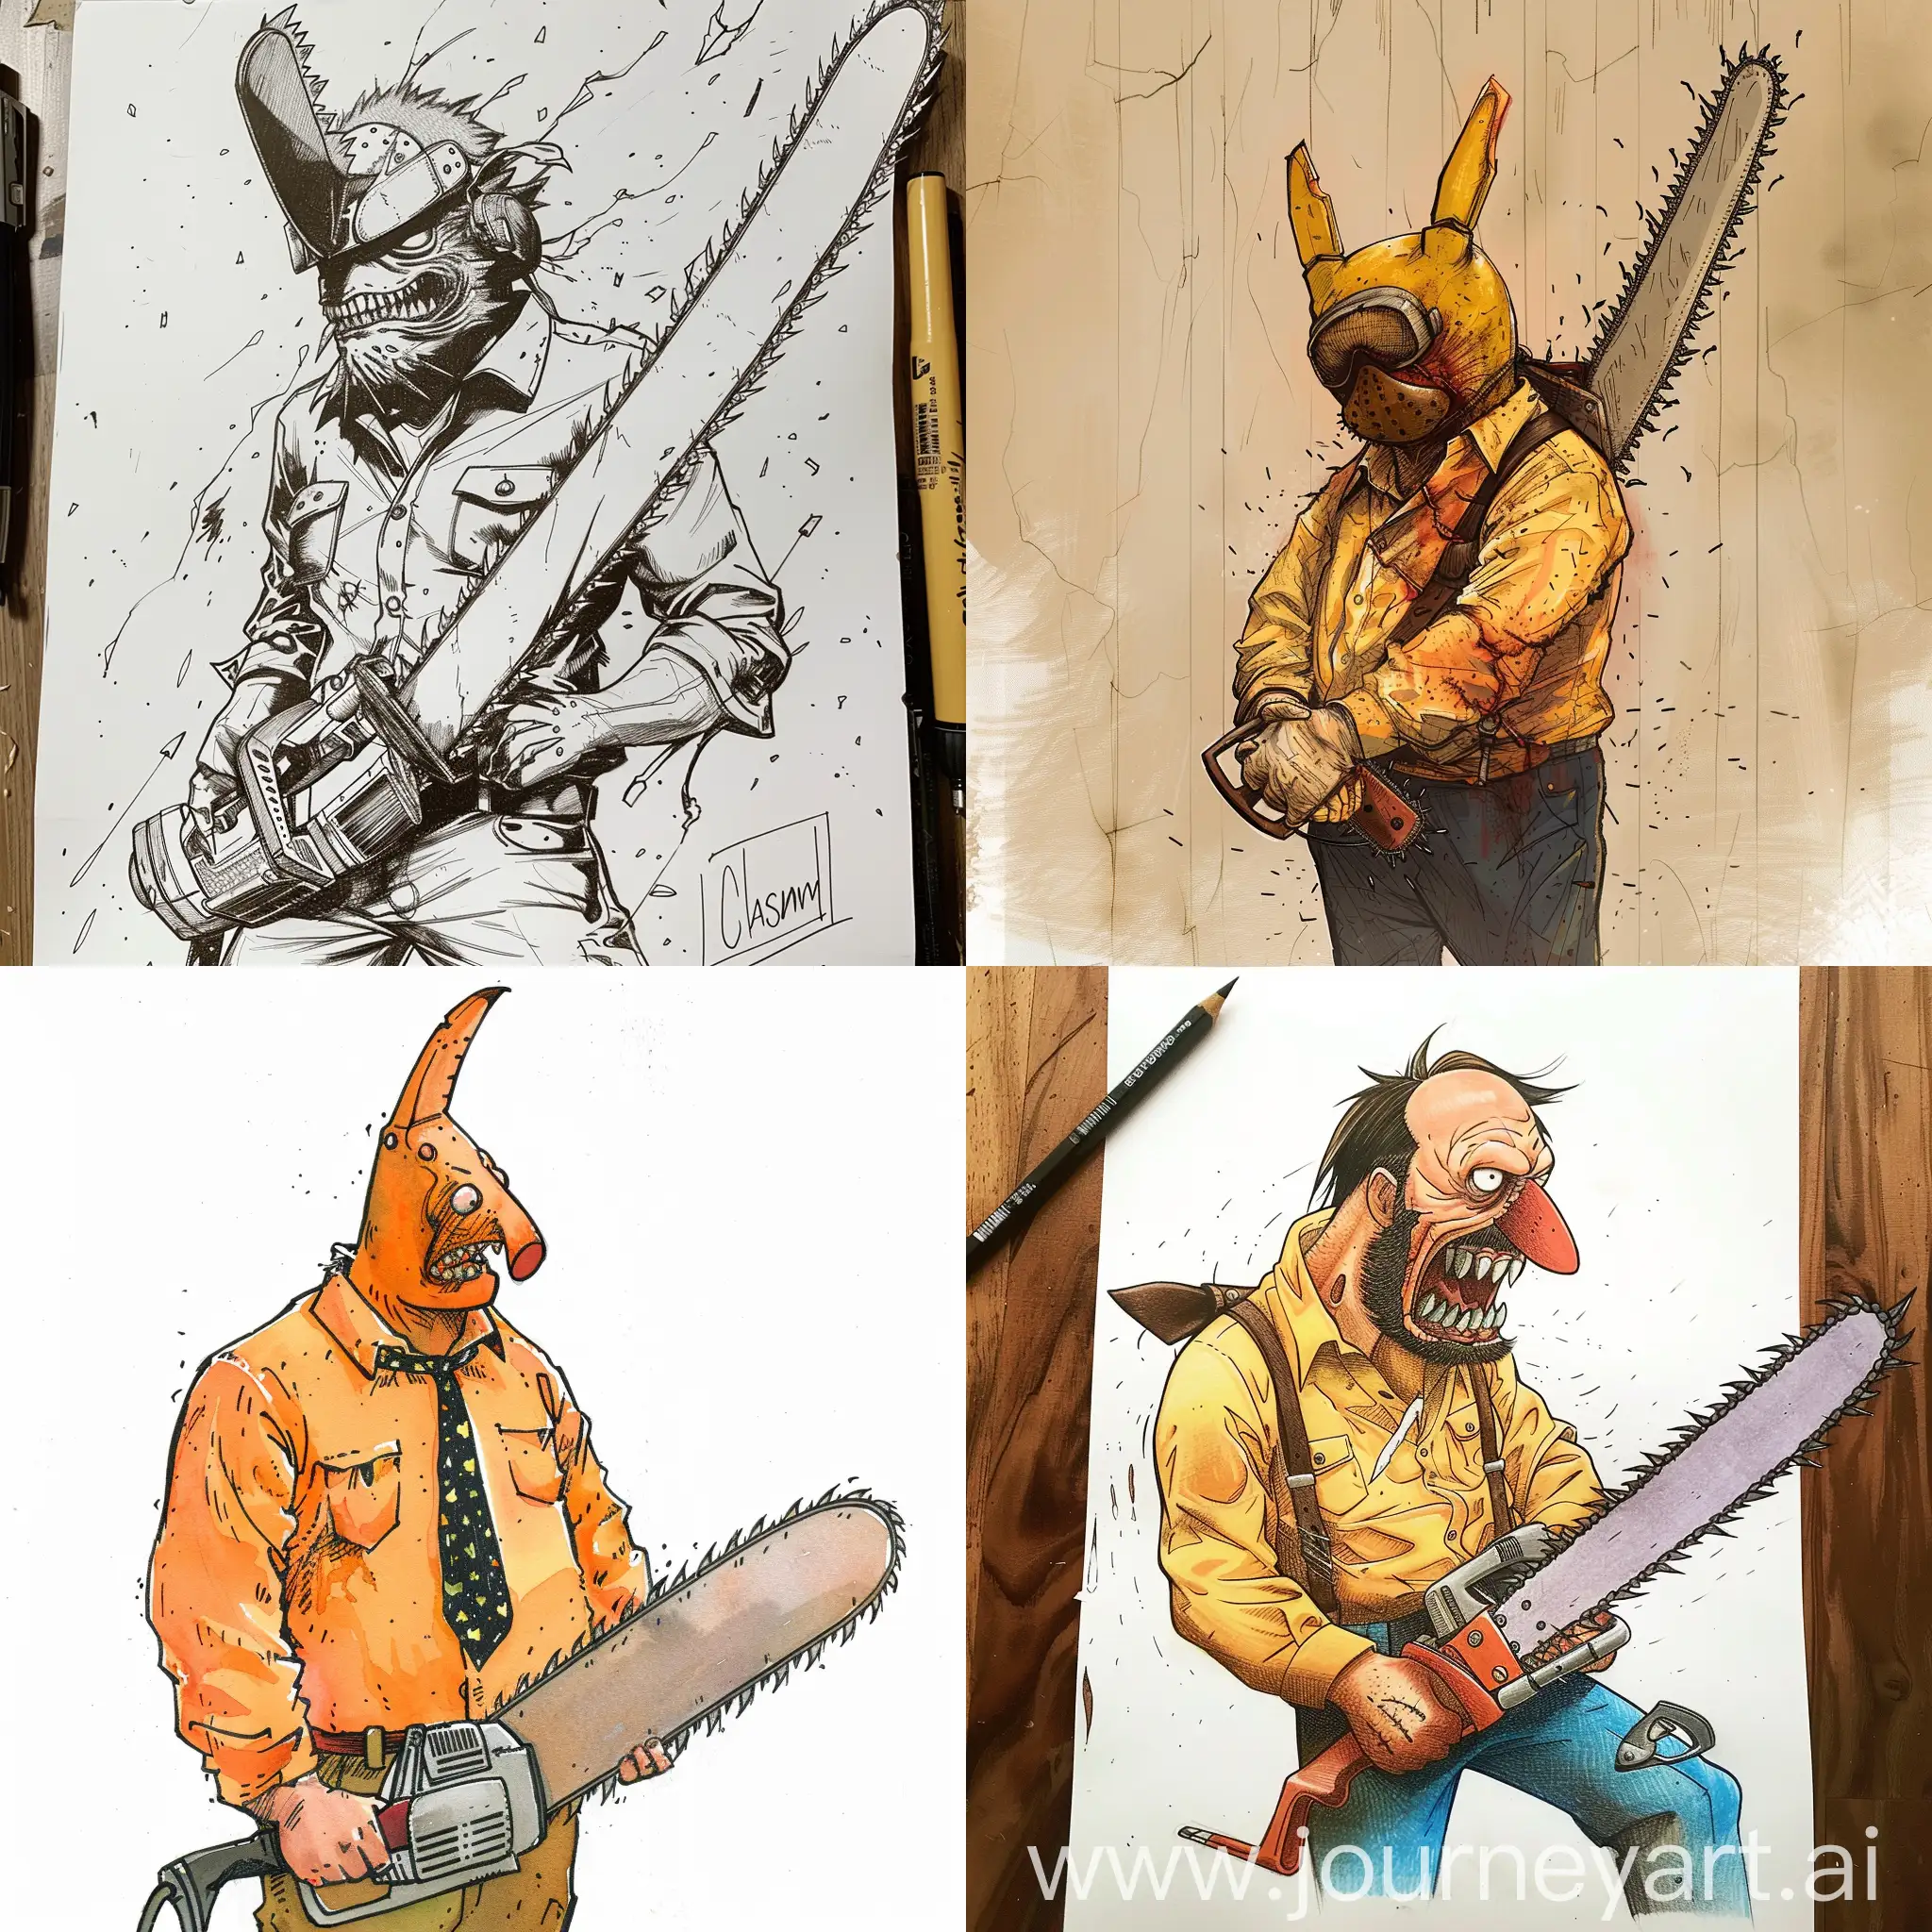 Chainsaw man characters drawn in studio ghibli style